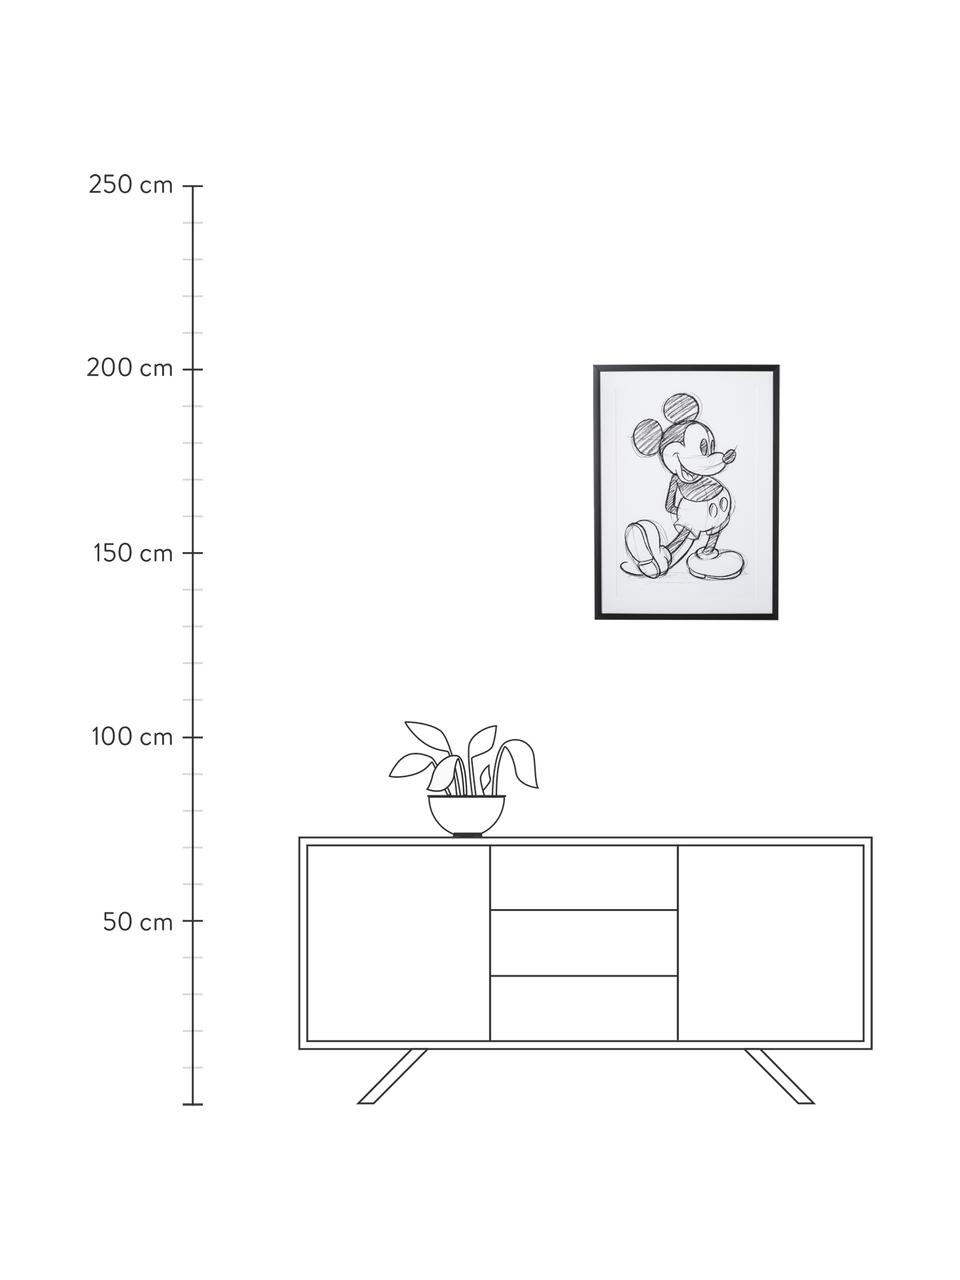 Gerahmter Digitaldruck Mickey, Bild: Digitaldruck, Rahmen: Kunststoff, Front: Glas, Mickey, B 50 x H 70 cm